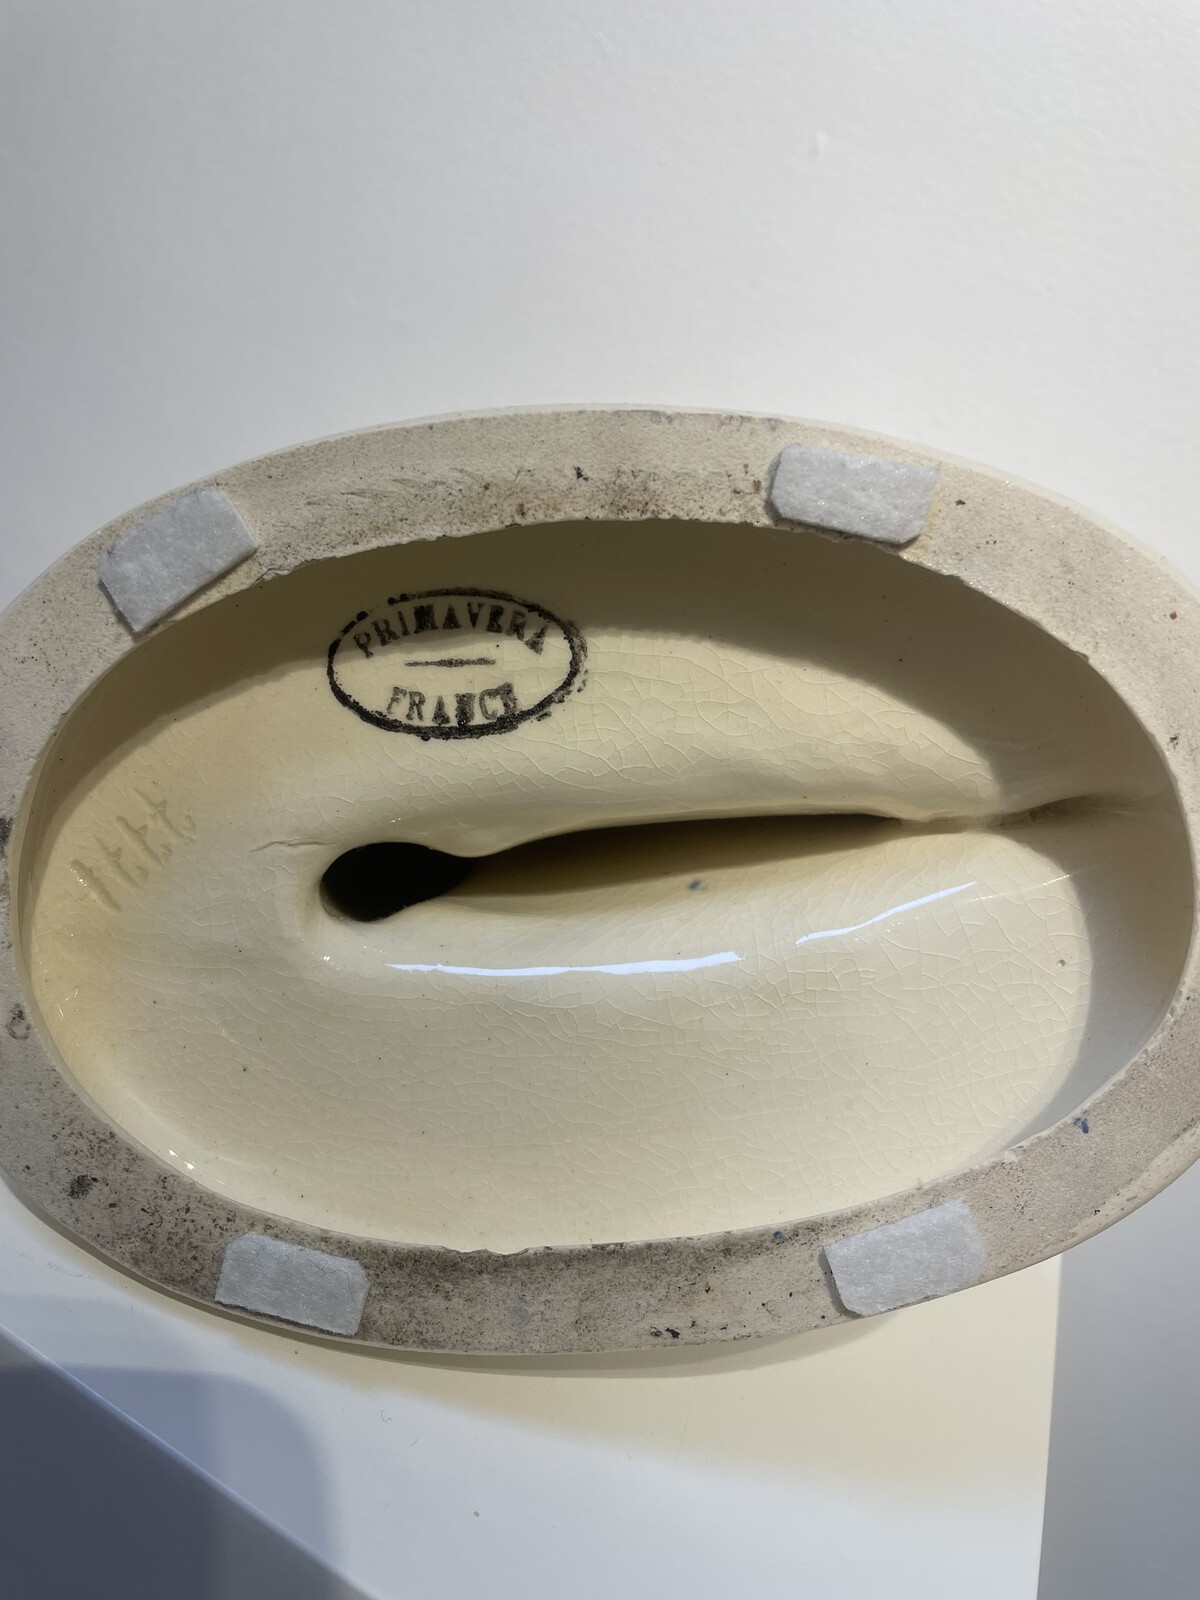 Art deco earthenware sculpture by Primavera - Italy 1930s